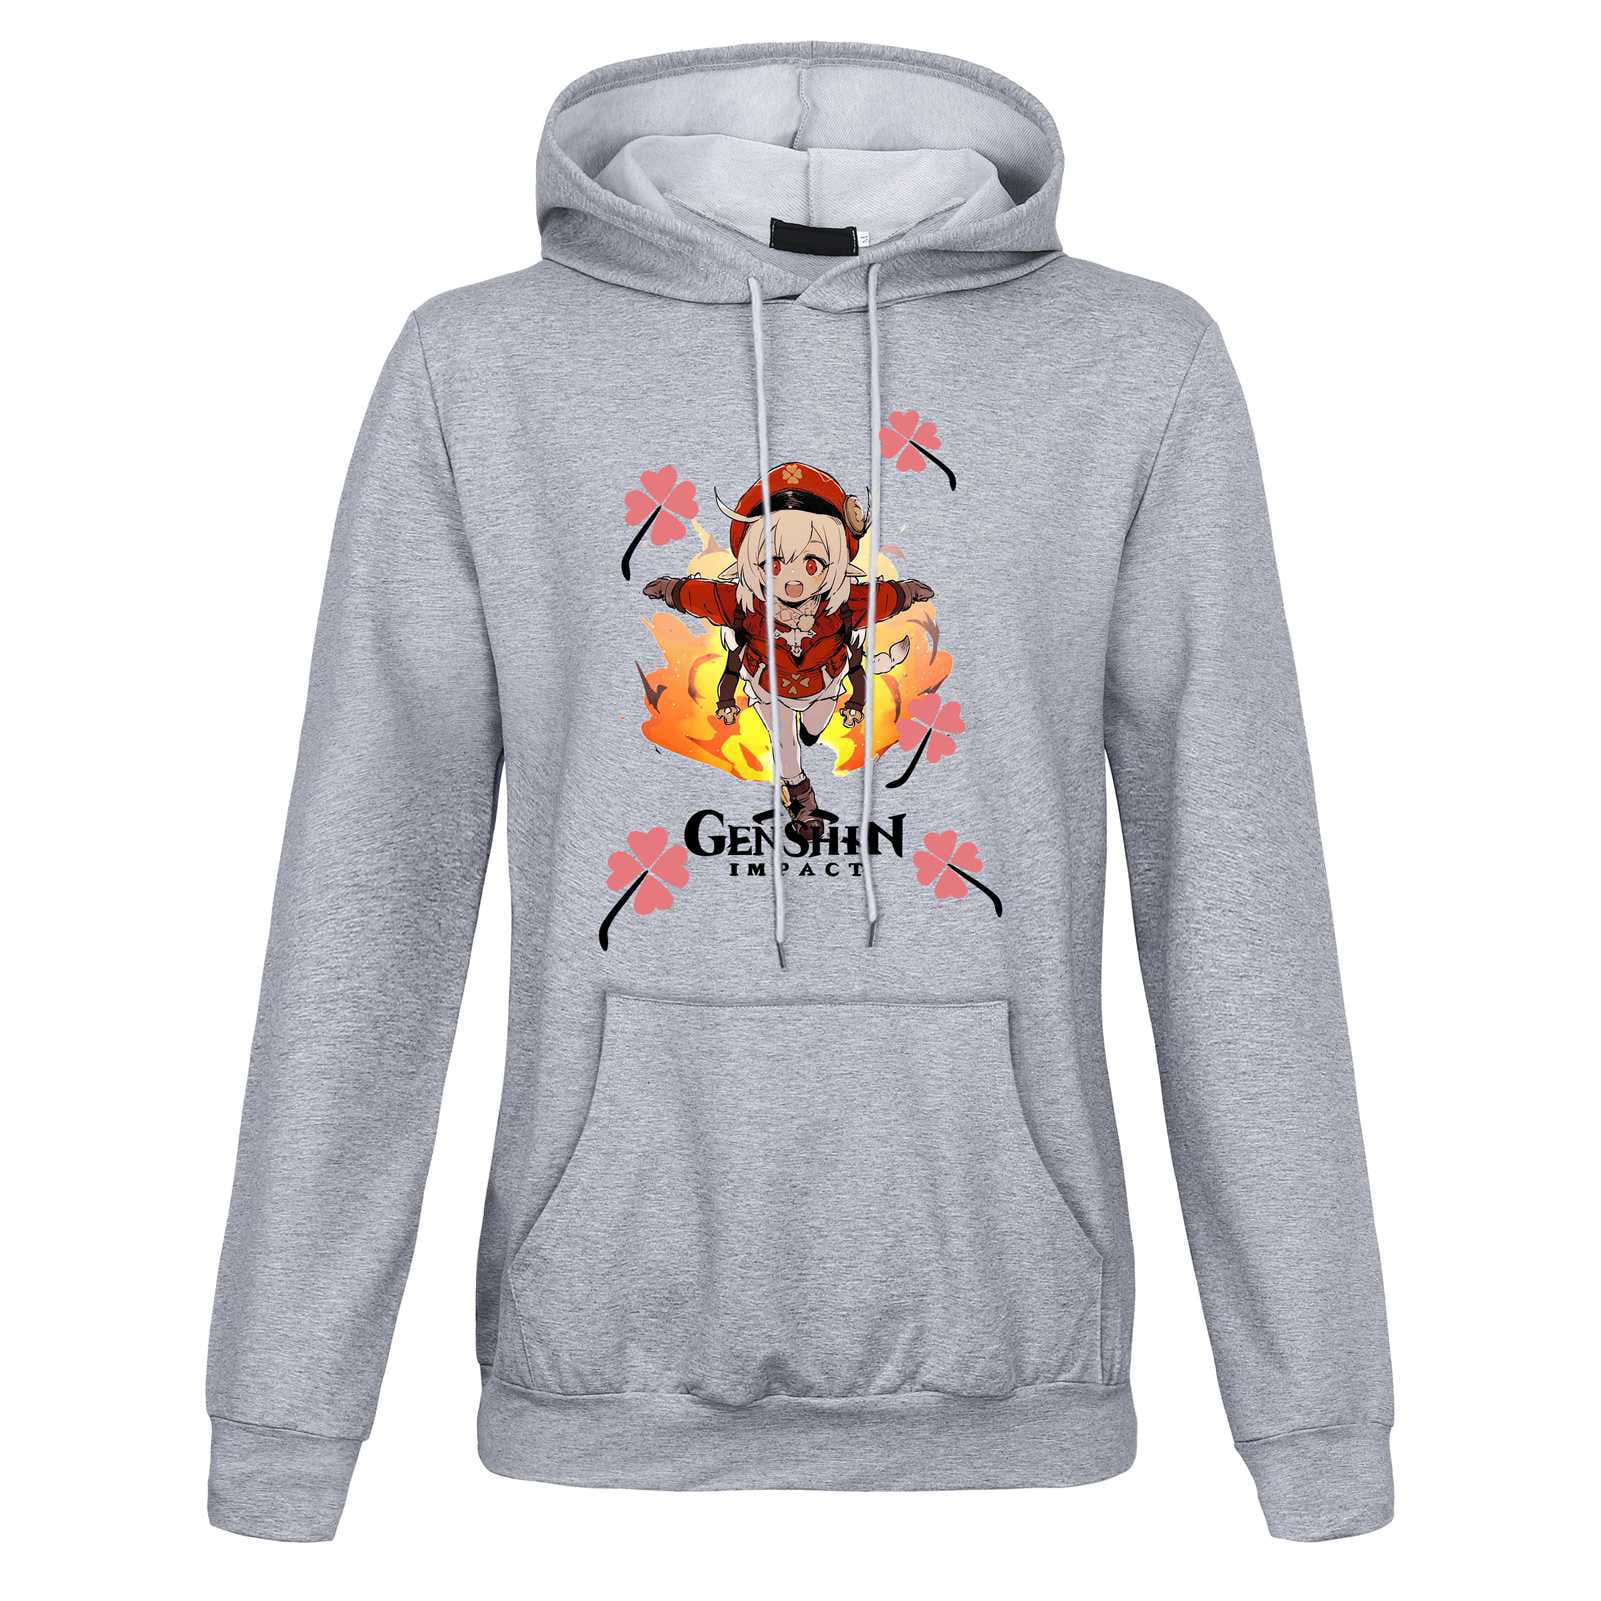 Genshin Impact Hoodies Game Cosplay 3D Printed Pullover Sweatshirt Unisex Women Men for Adults Kids